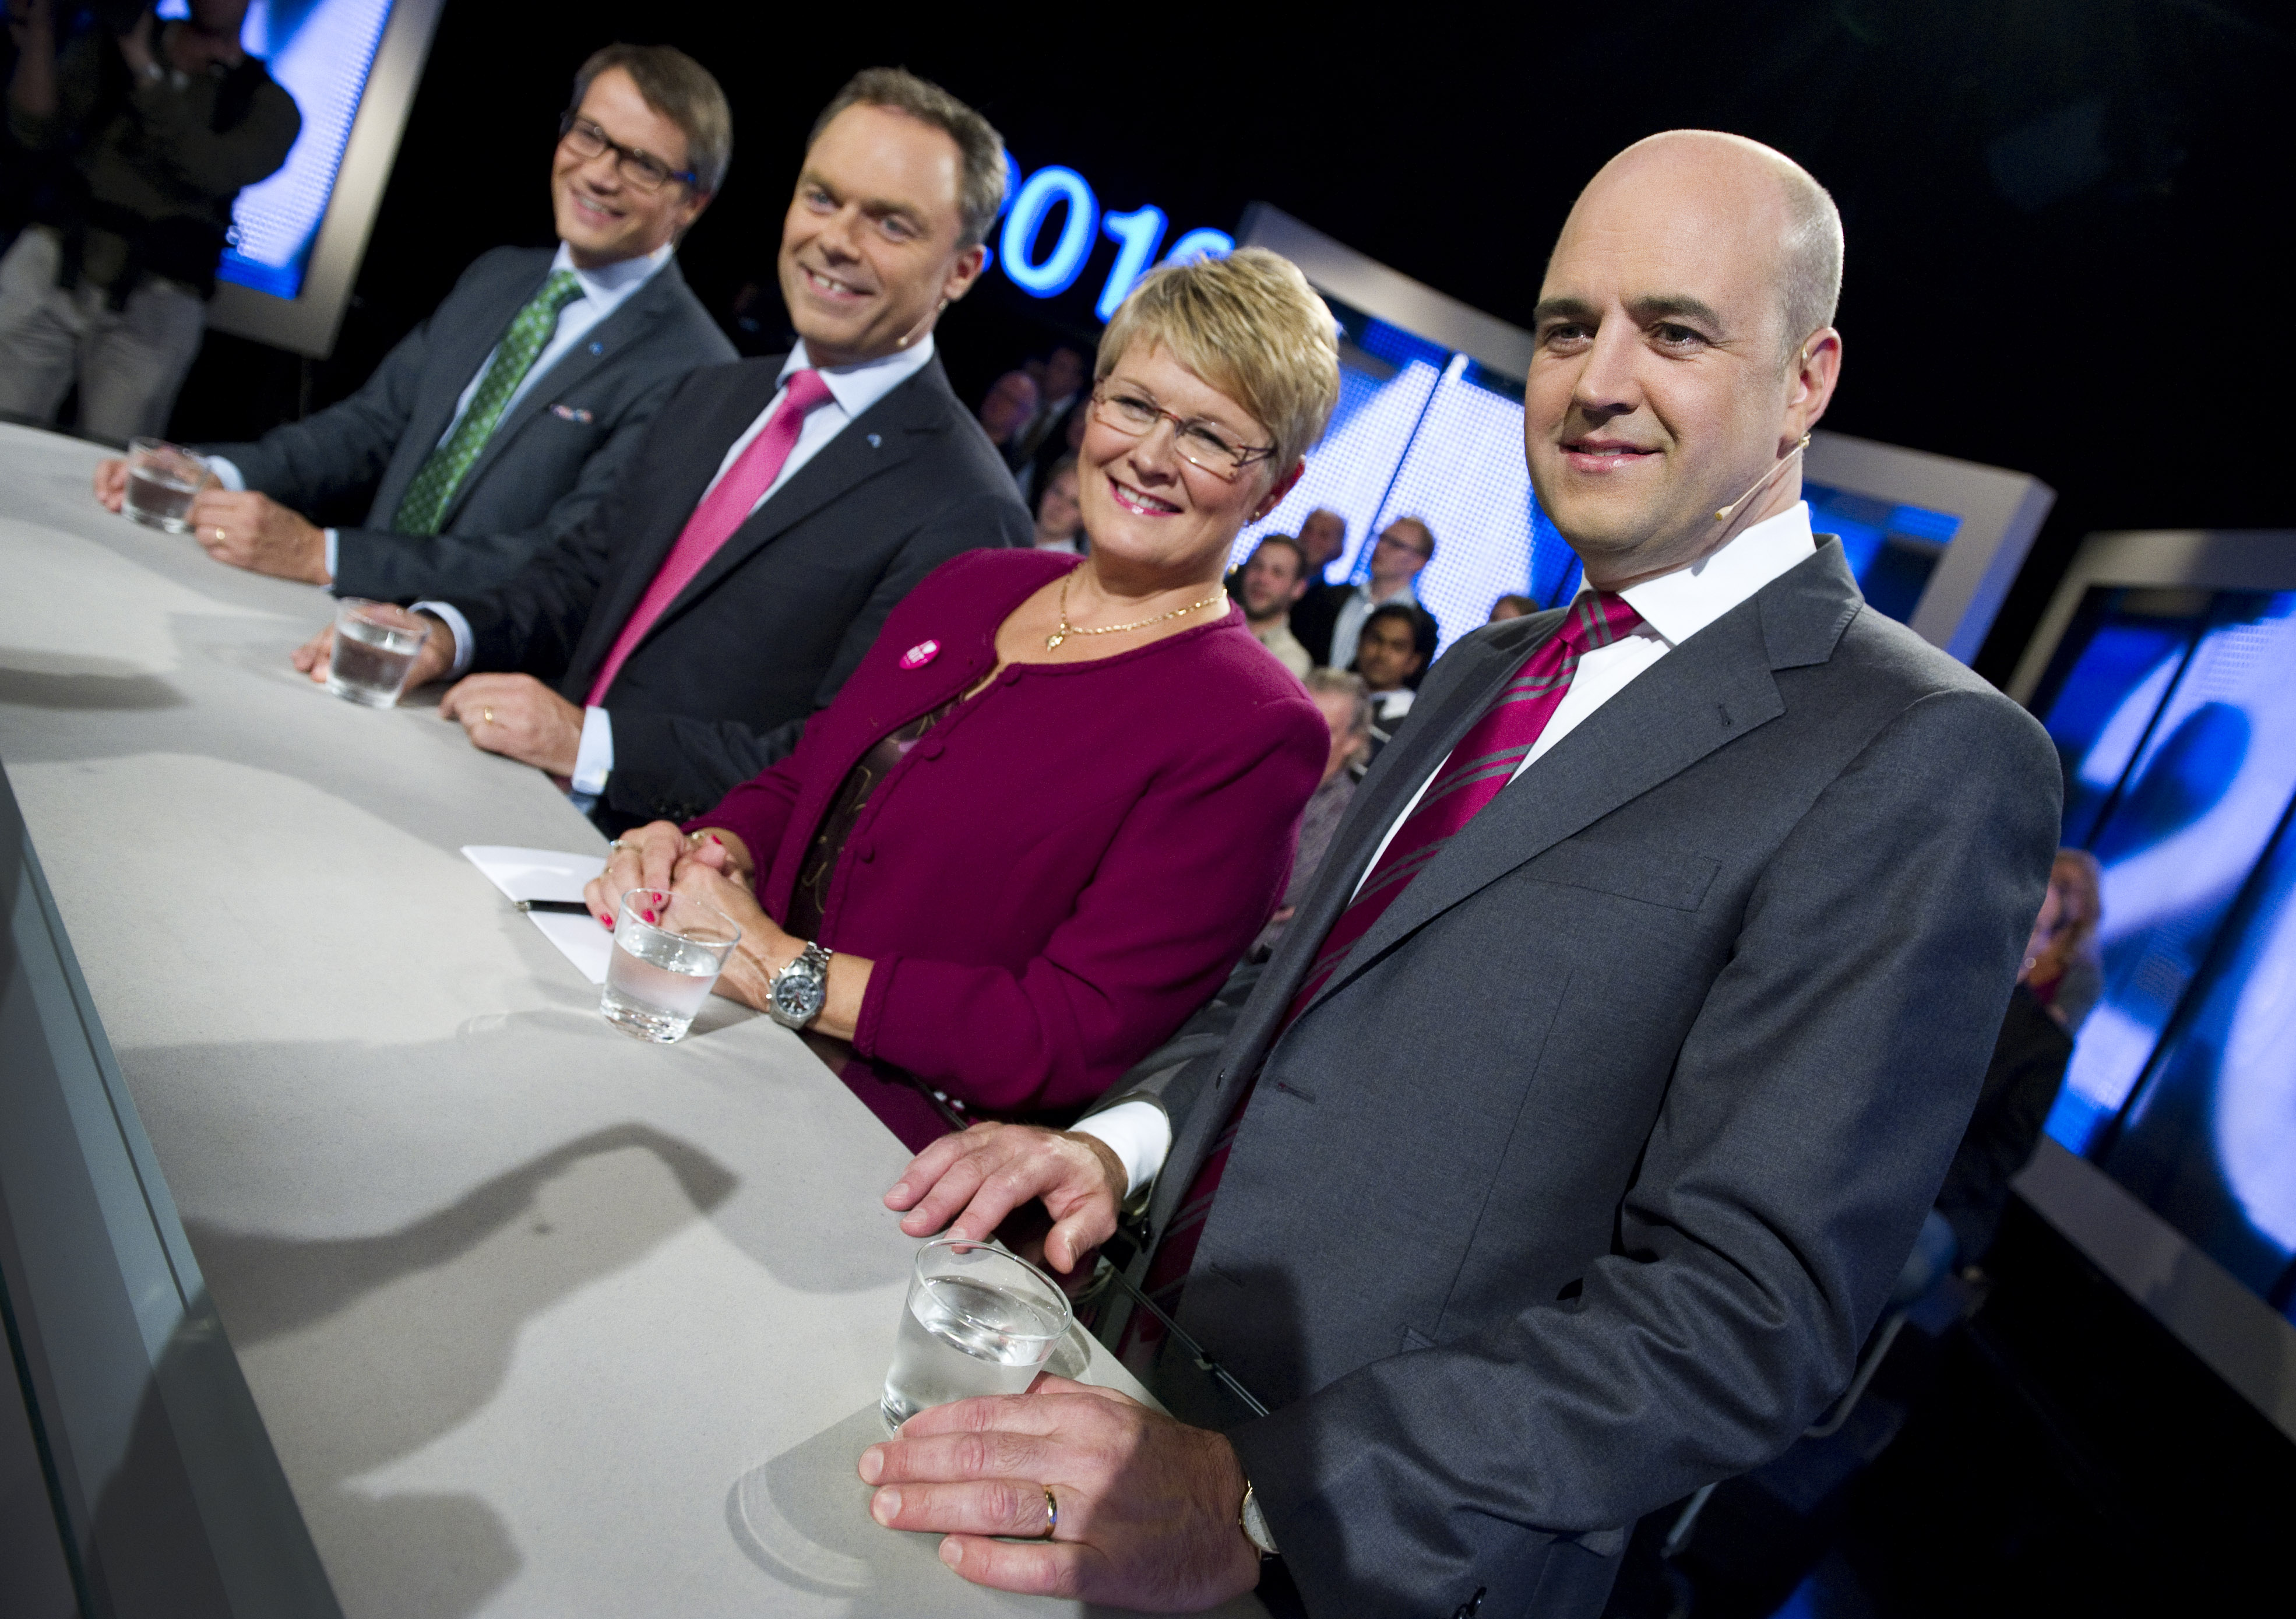 Riksdagsvalet 2010, Partiledarutfrågning, Jan Björklund, TV4, Fredrik Reinfeldt, Alliansen, Malou von Sivers, Jenny Östergren